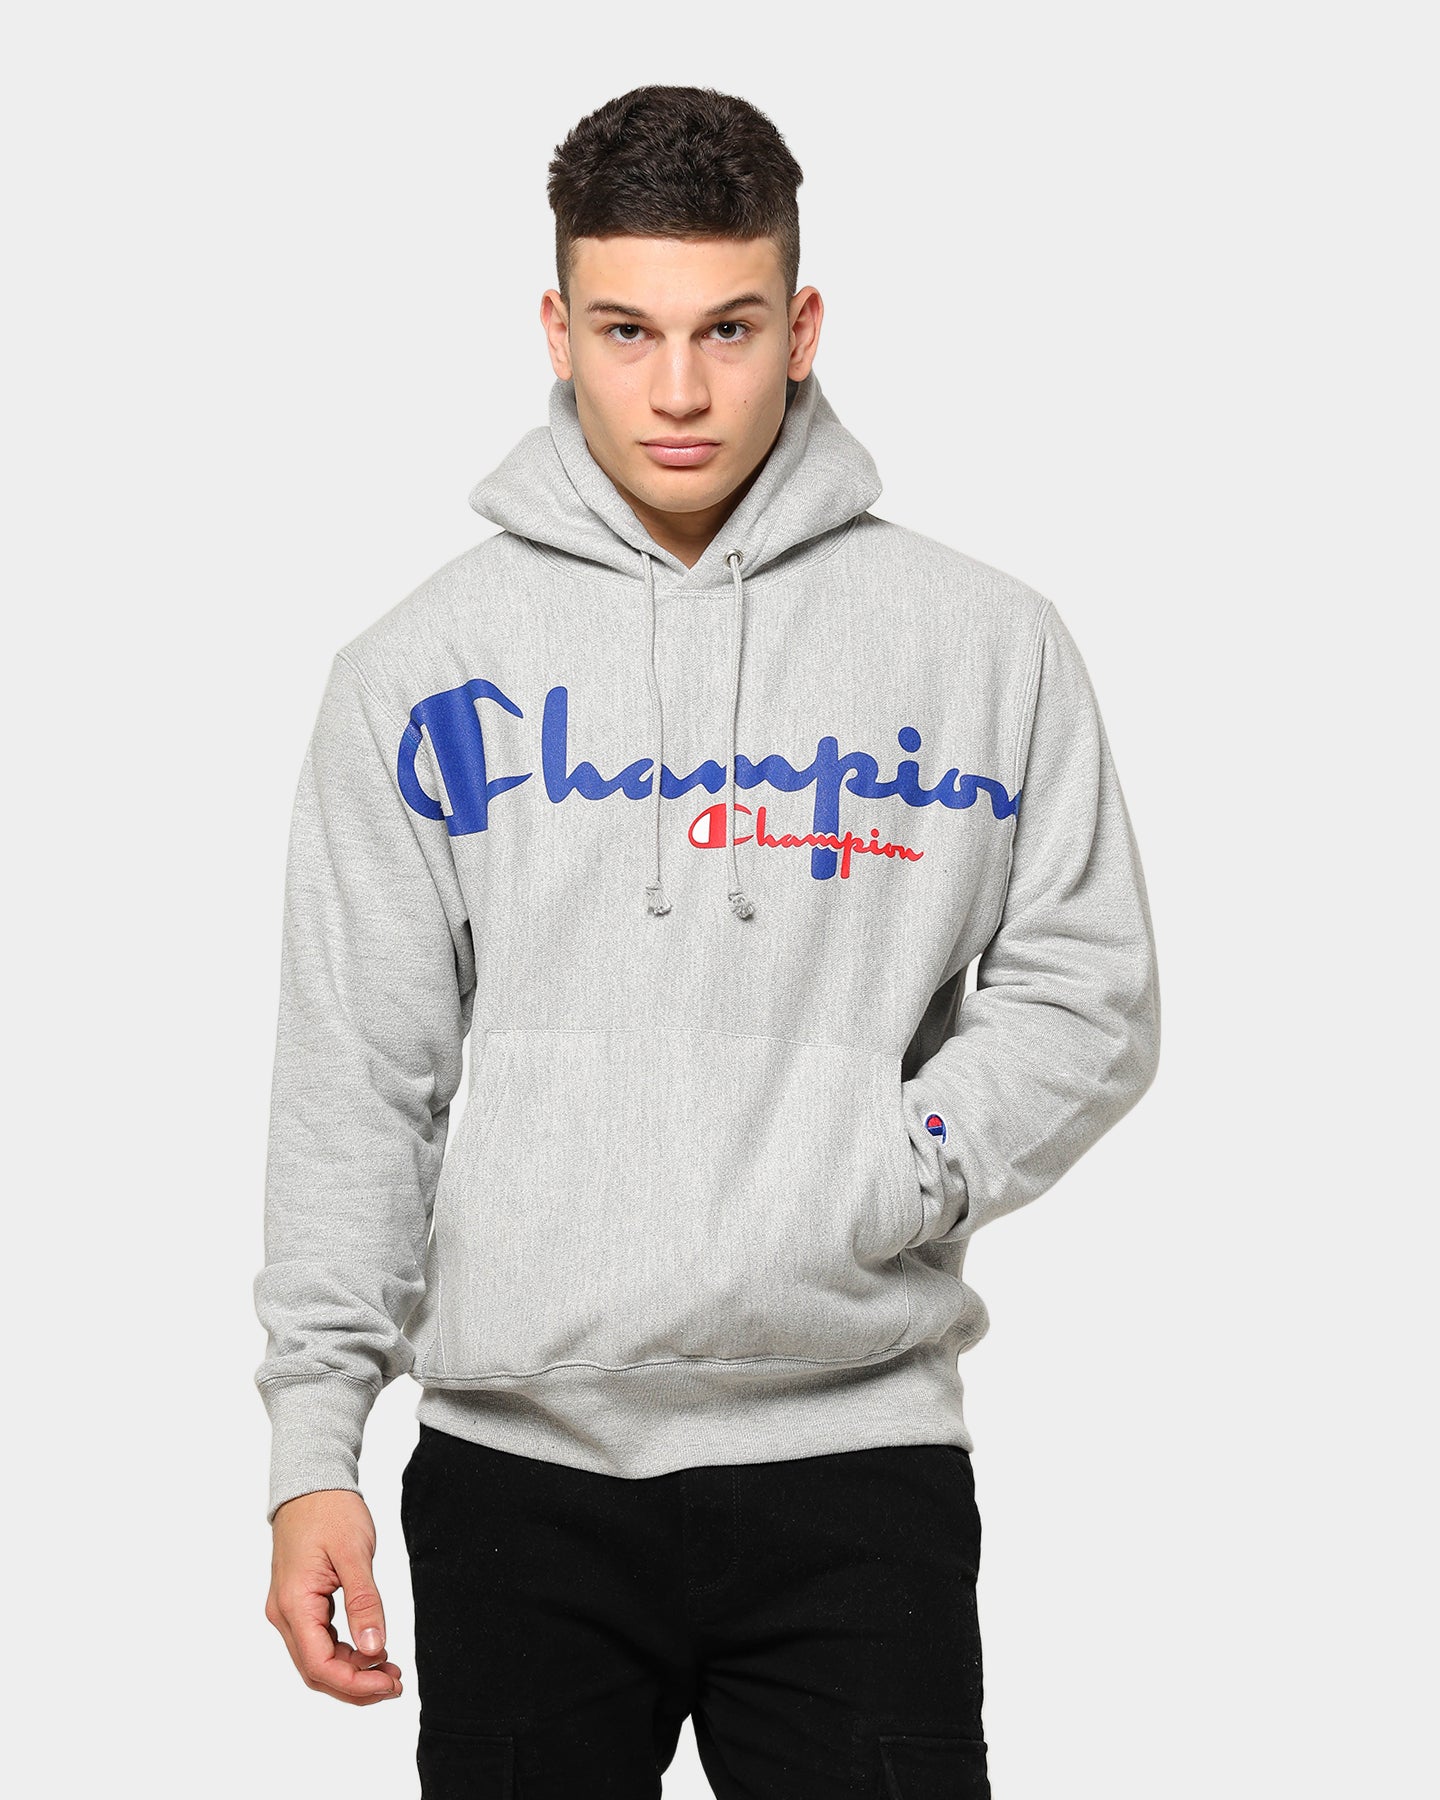 cheap champion hoodies nz